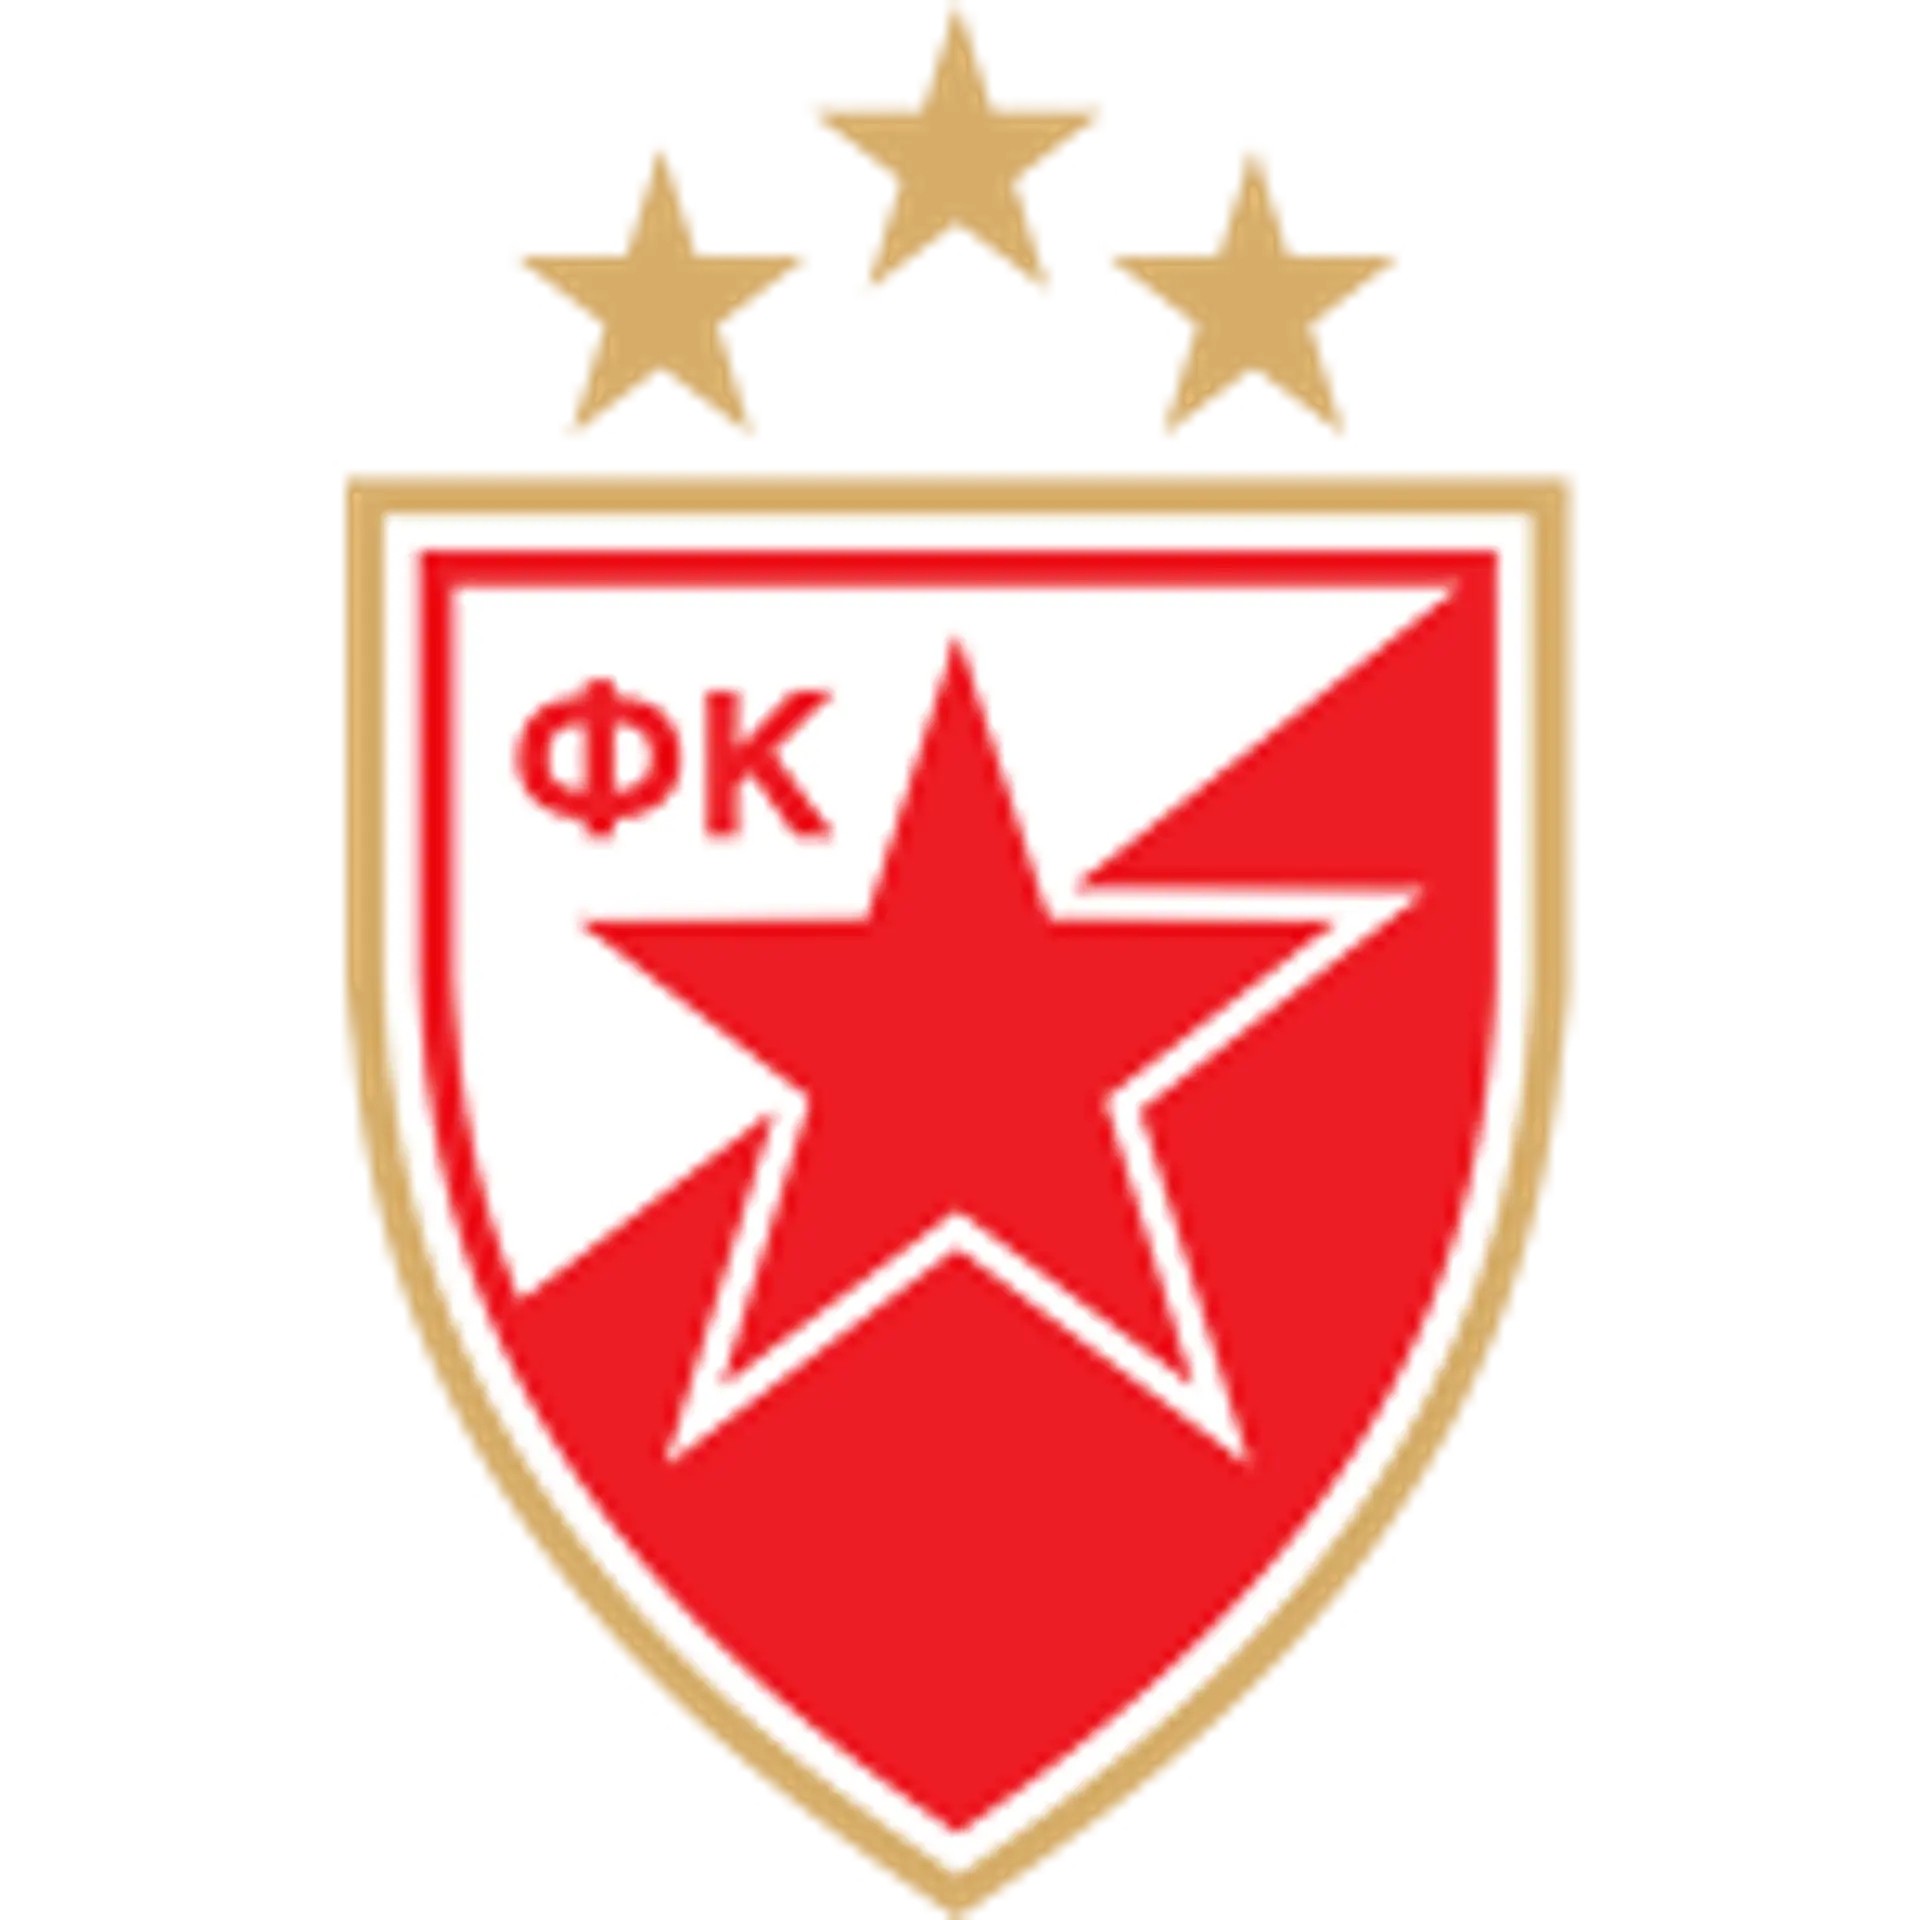 FK Napredak Krusevac vs Red Star Belgrade: Live Score, Stream and H2H  results 12/3/2023. Preview match FK Napredak Krusevac vs Red Star Belgrade,  team, start time.